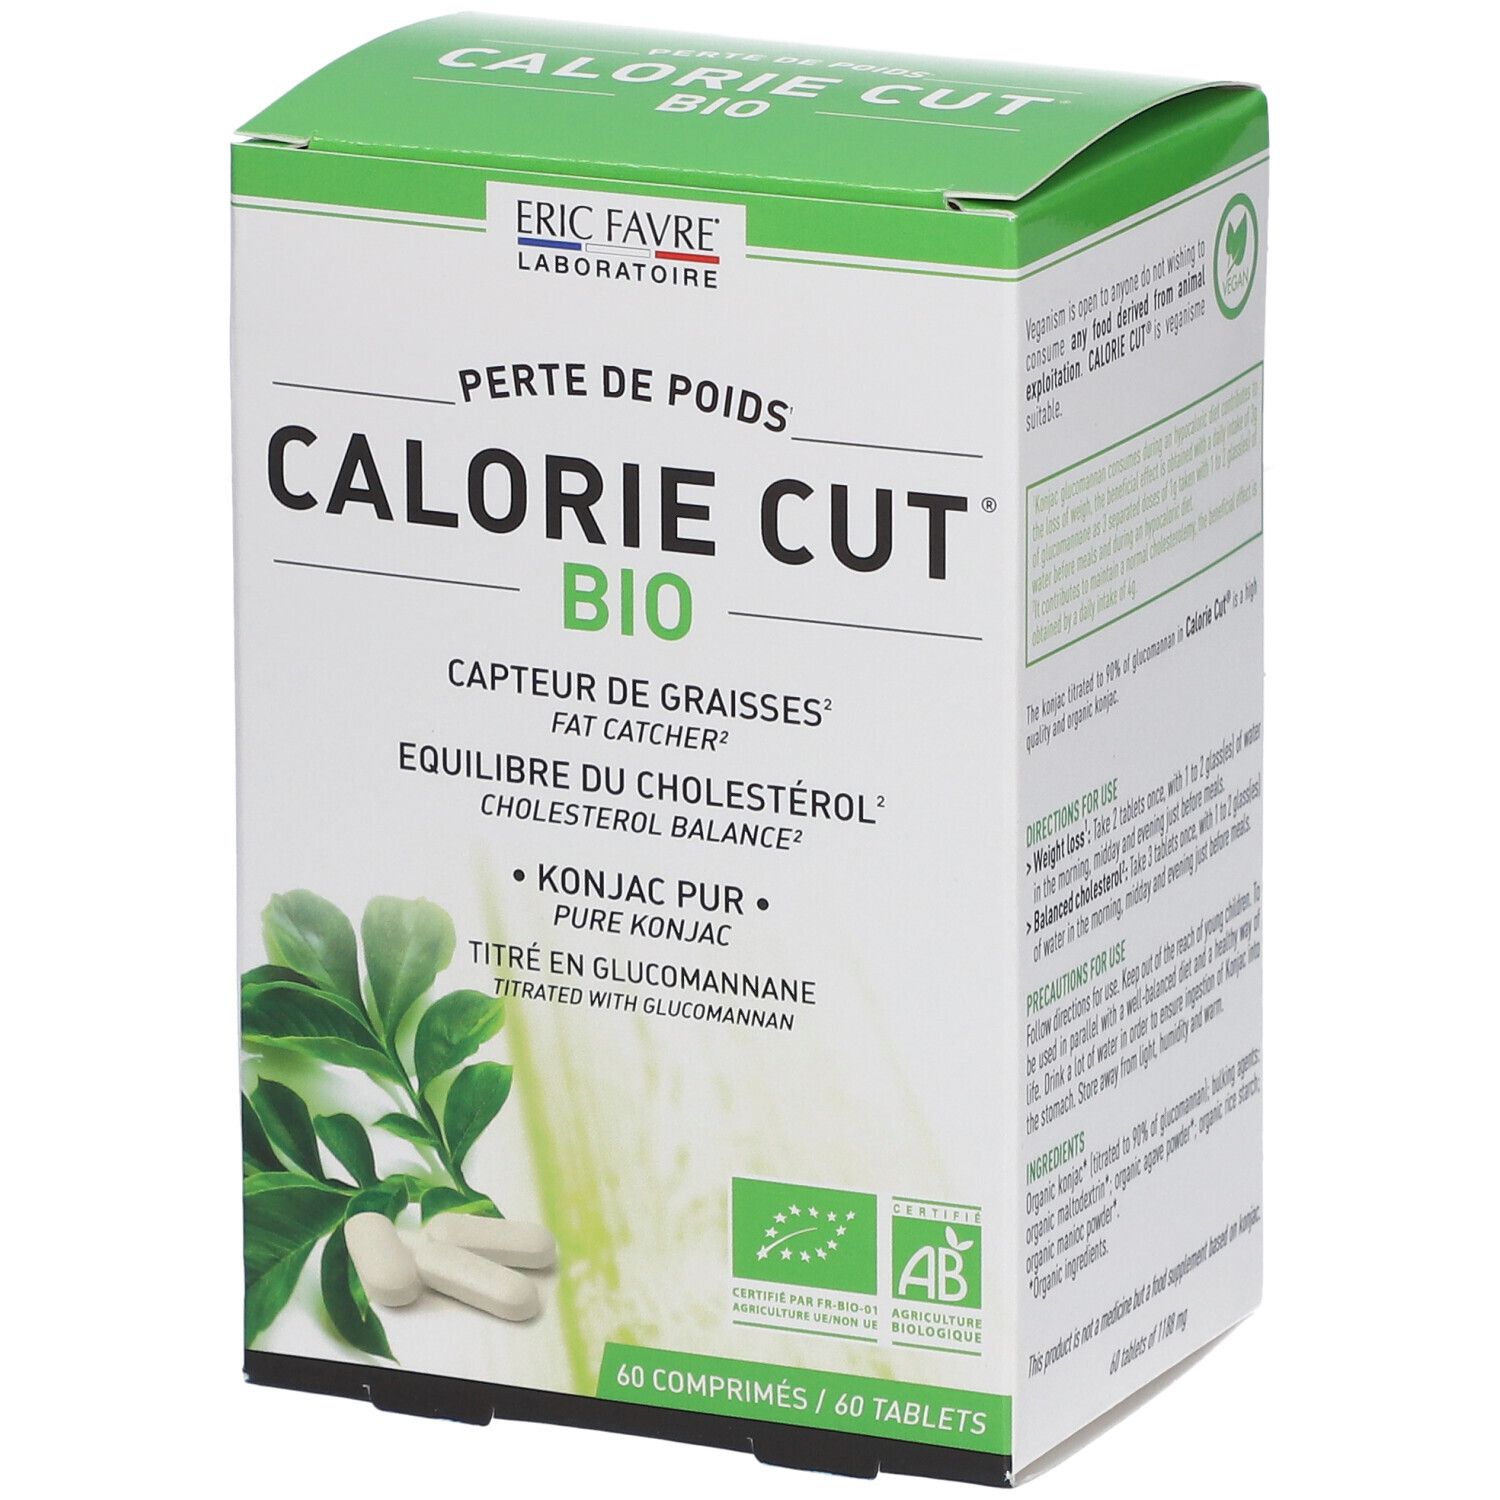 Eric Favre Calorie cut vegan 10.6 - Perte de poids - konjac pur bio